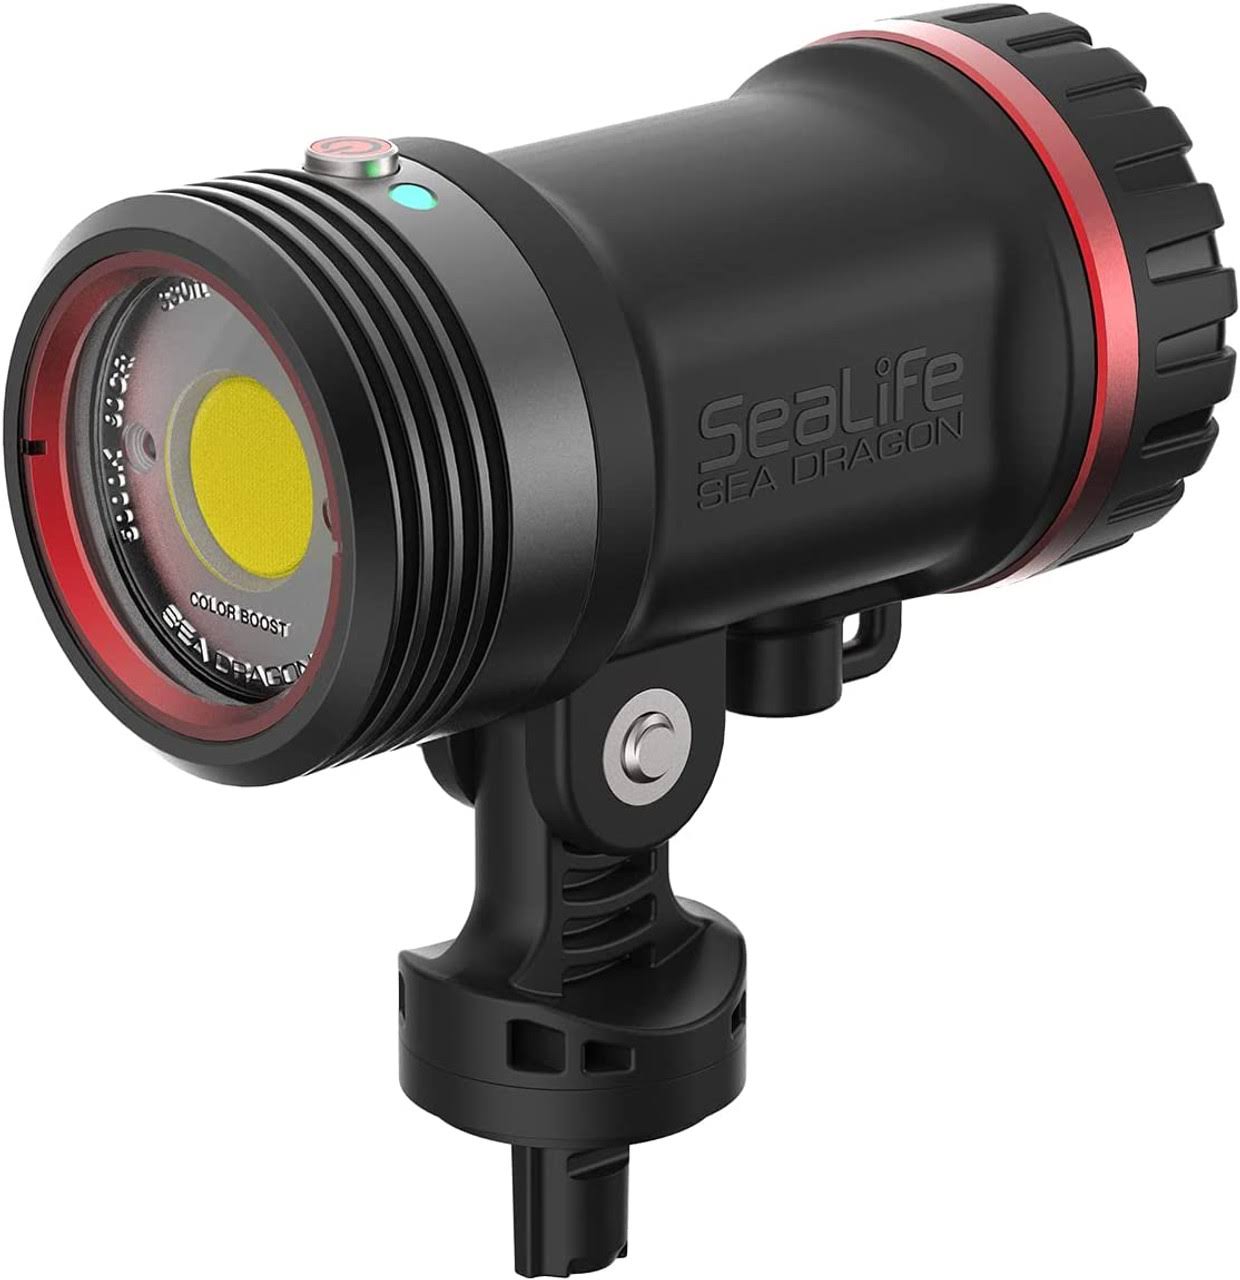 Sealife SeaLife Sea Dragon 5000+ Photo-Video Light